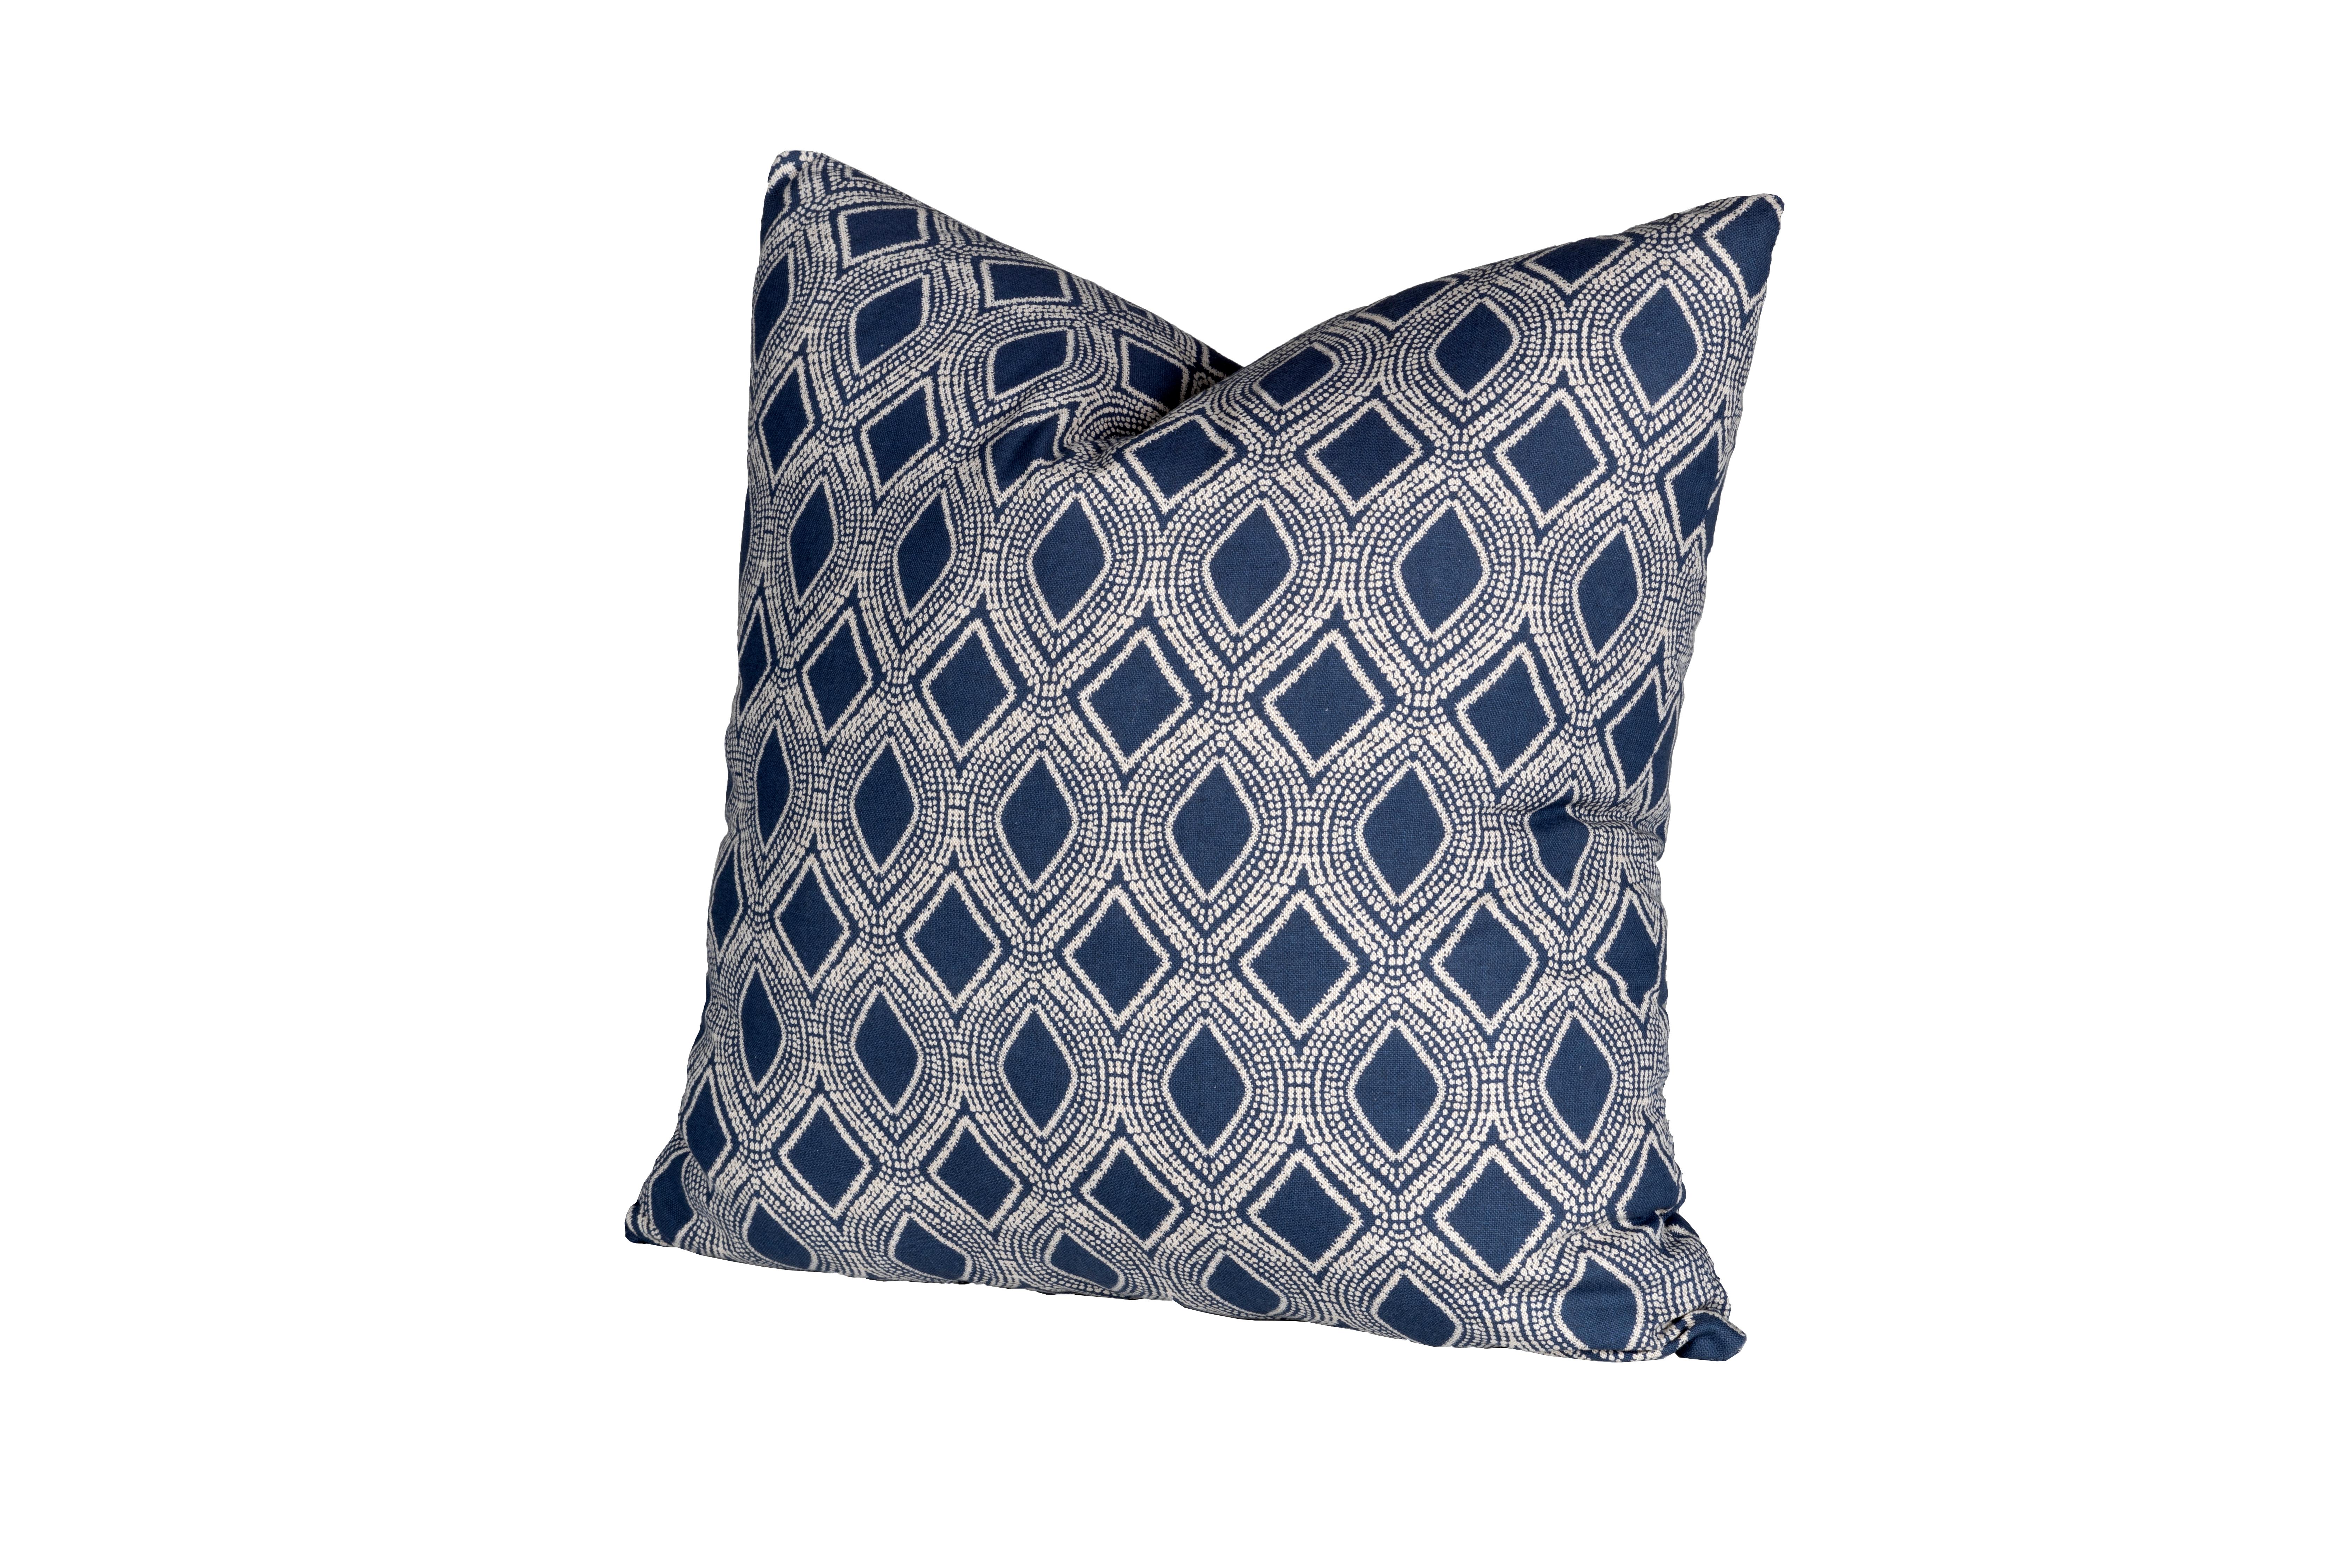 Organic Modern Art Deco Damask Rhombus Pillow For Sale